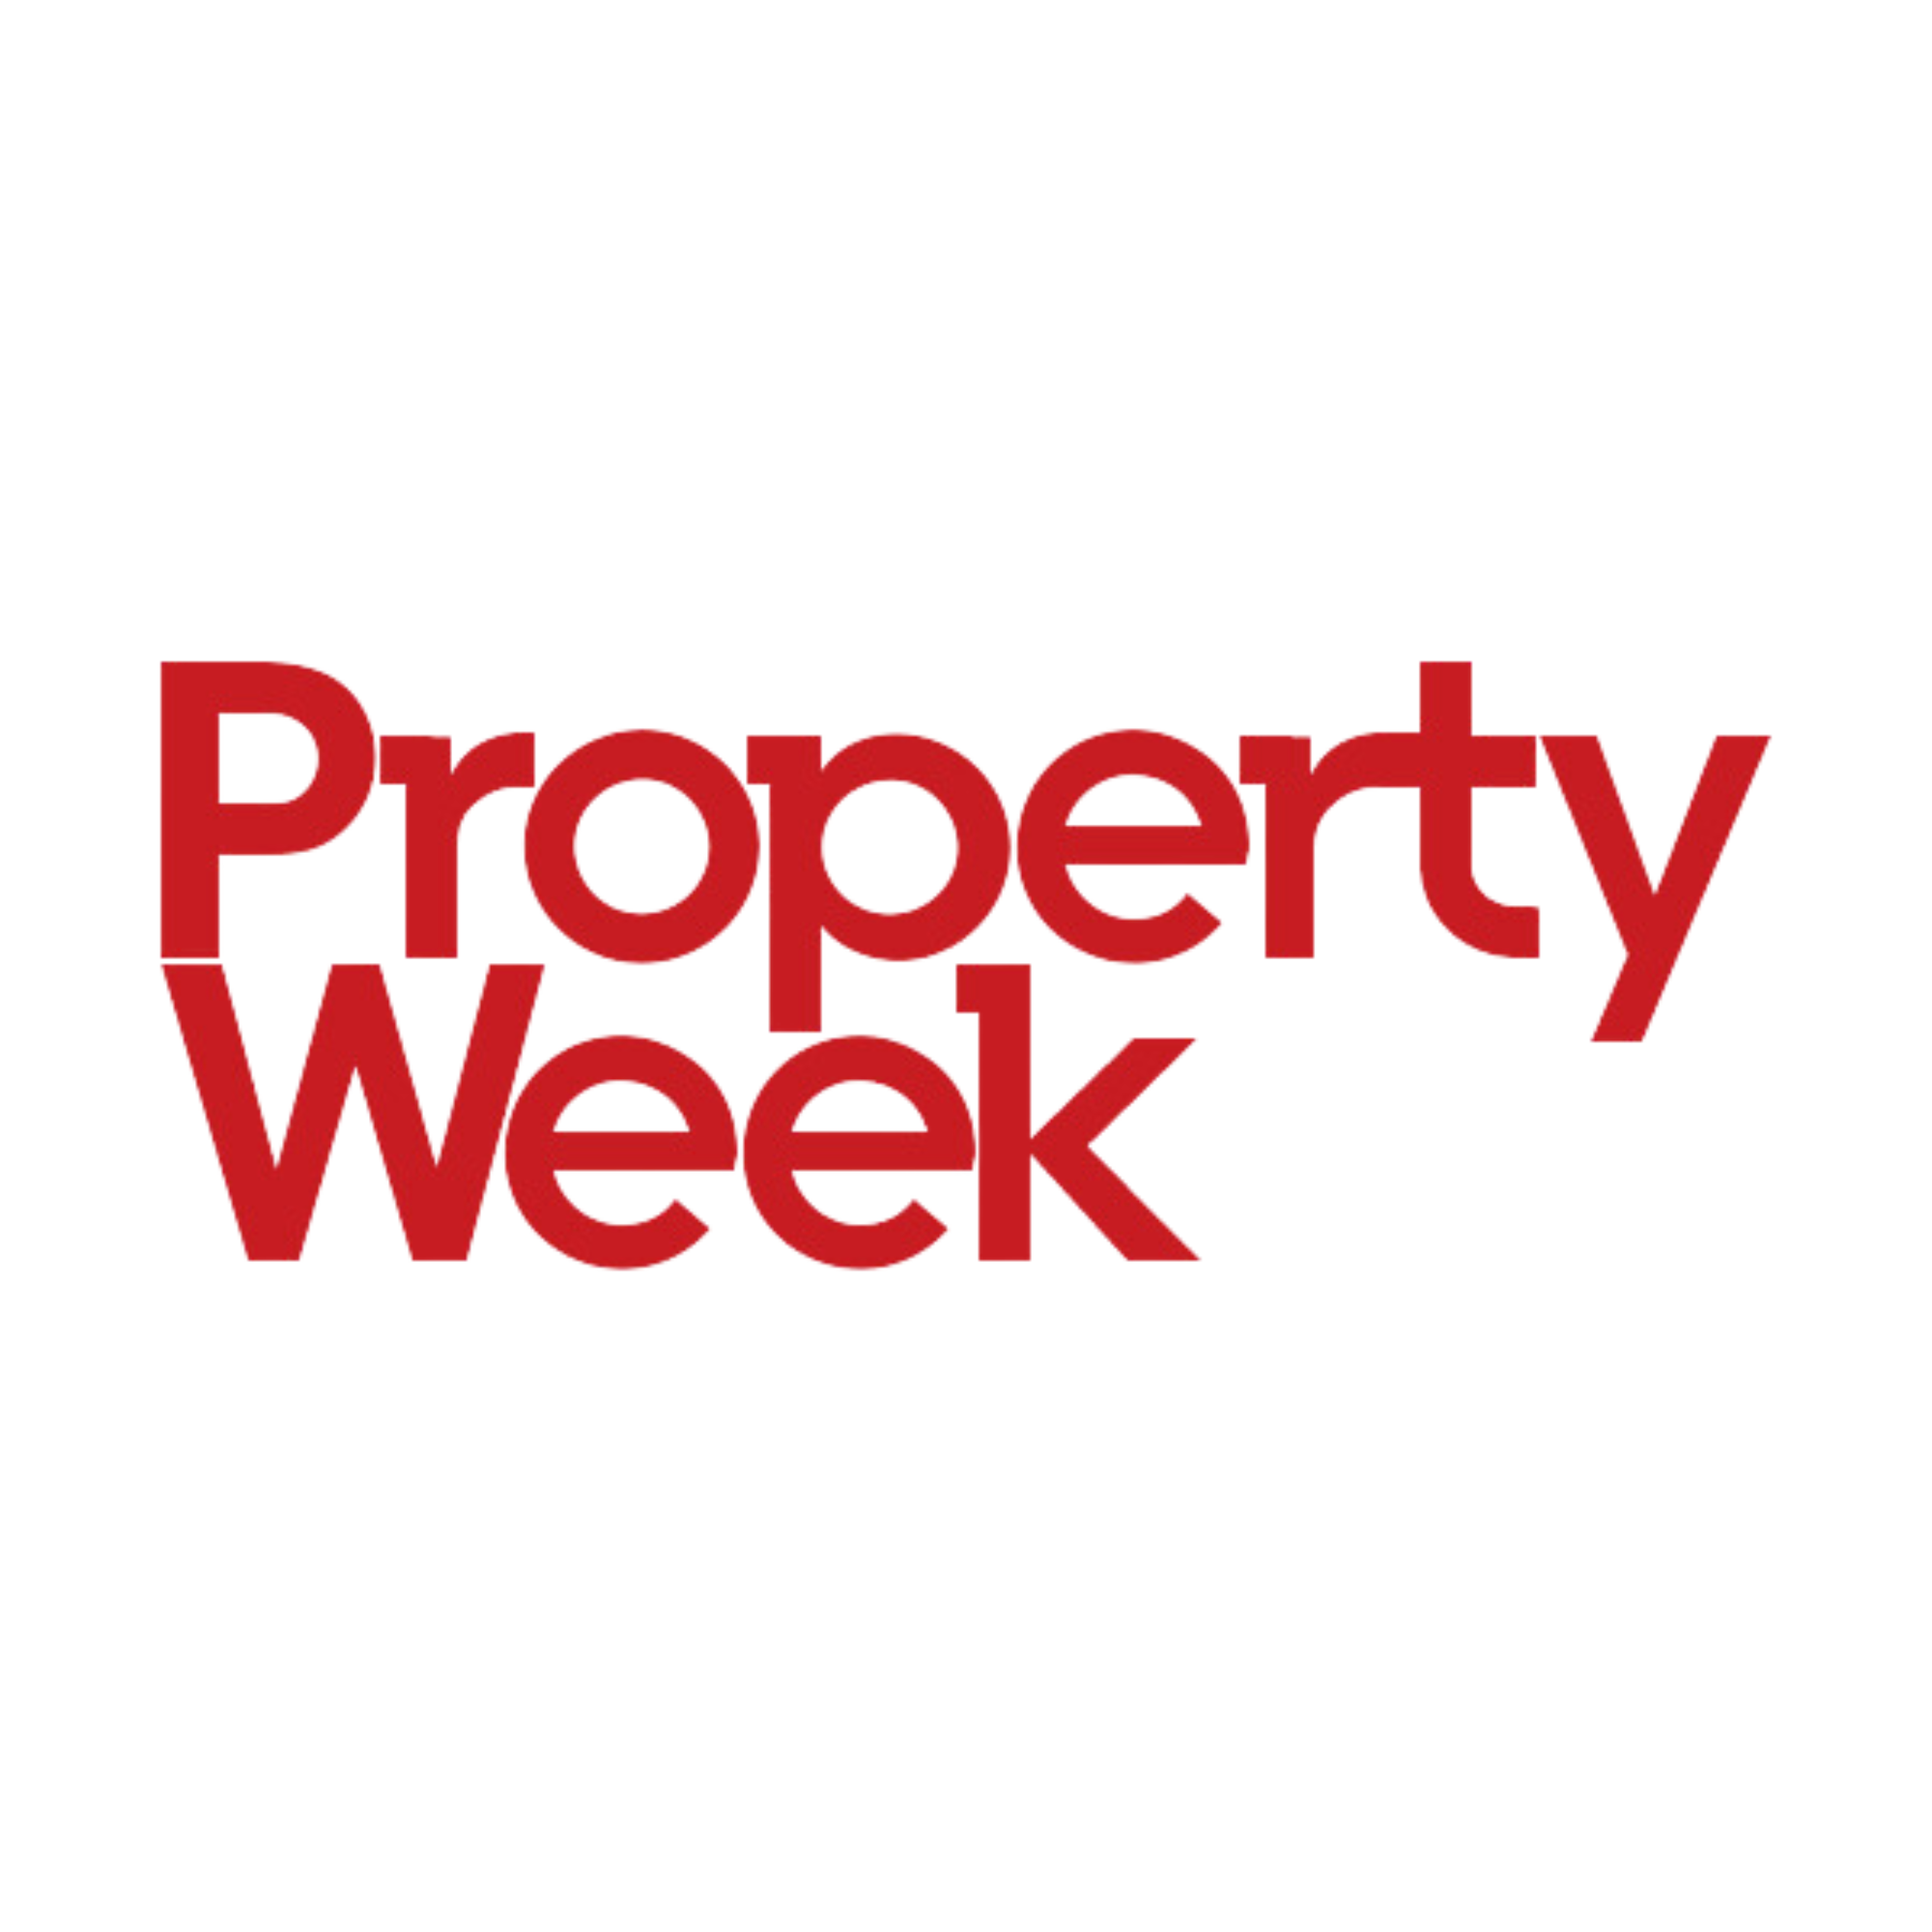 Property Week logo